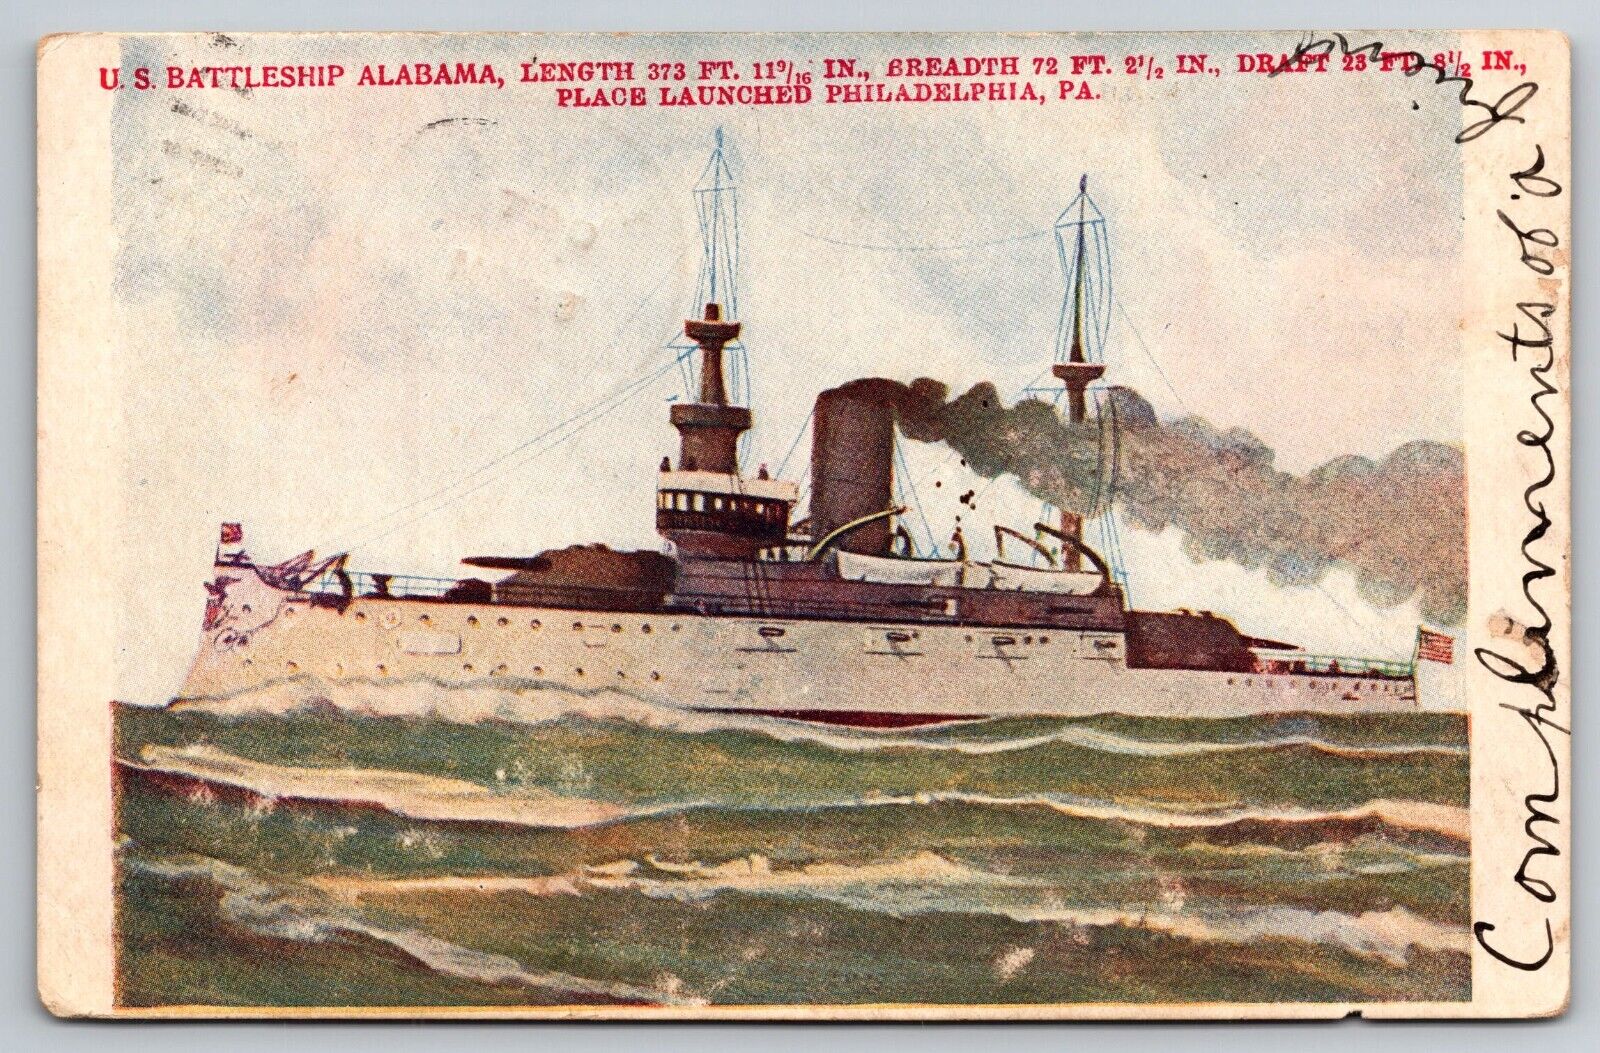 c1906 US Battleship Alabama Steamer Ship Place Launched Philadelphia PA Postcard